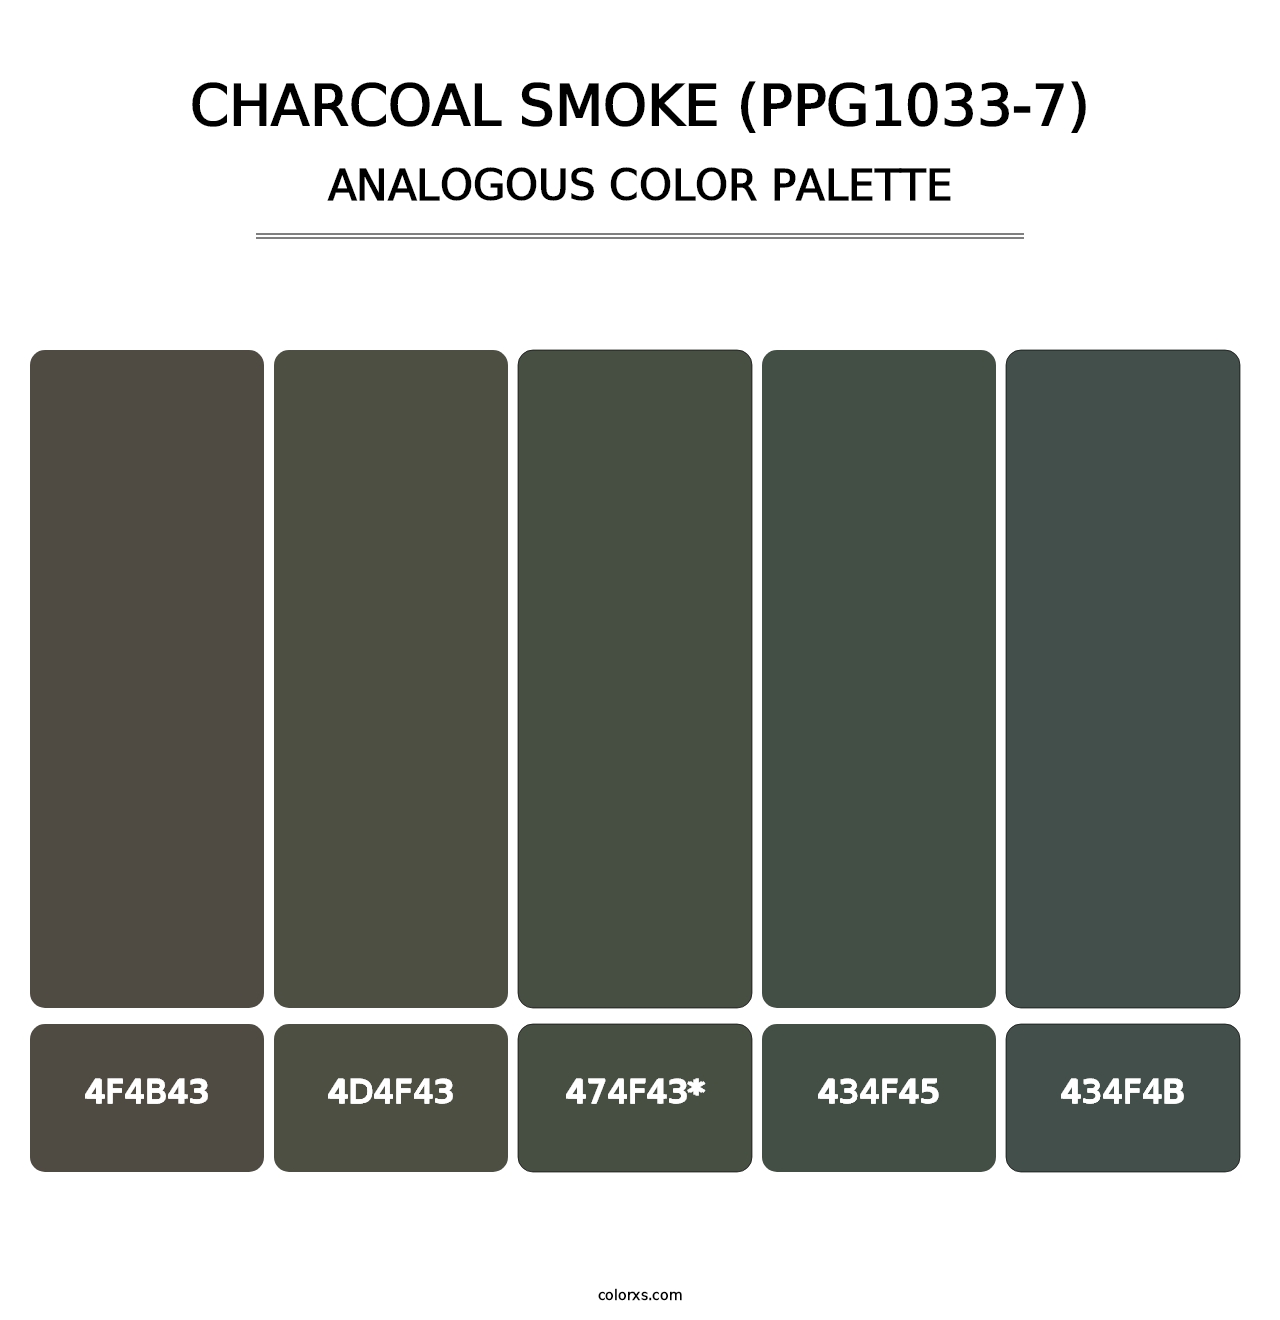 Charcoal Smoke (PPG1033-7) - Analogous Color Palette